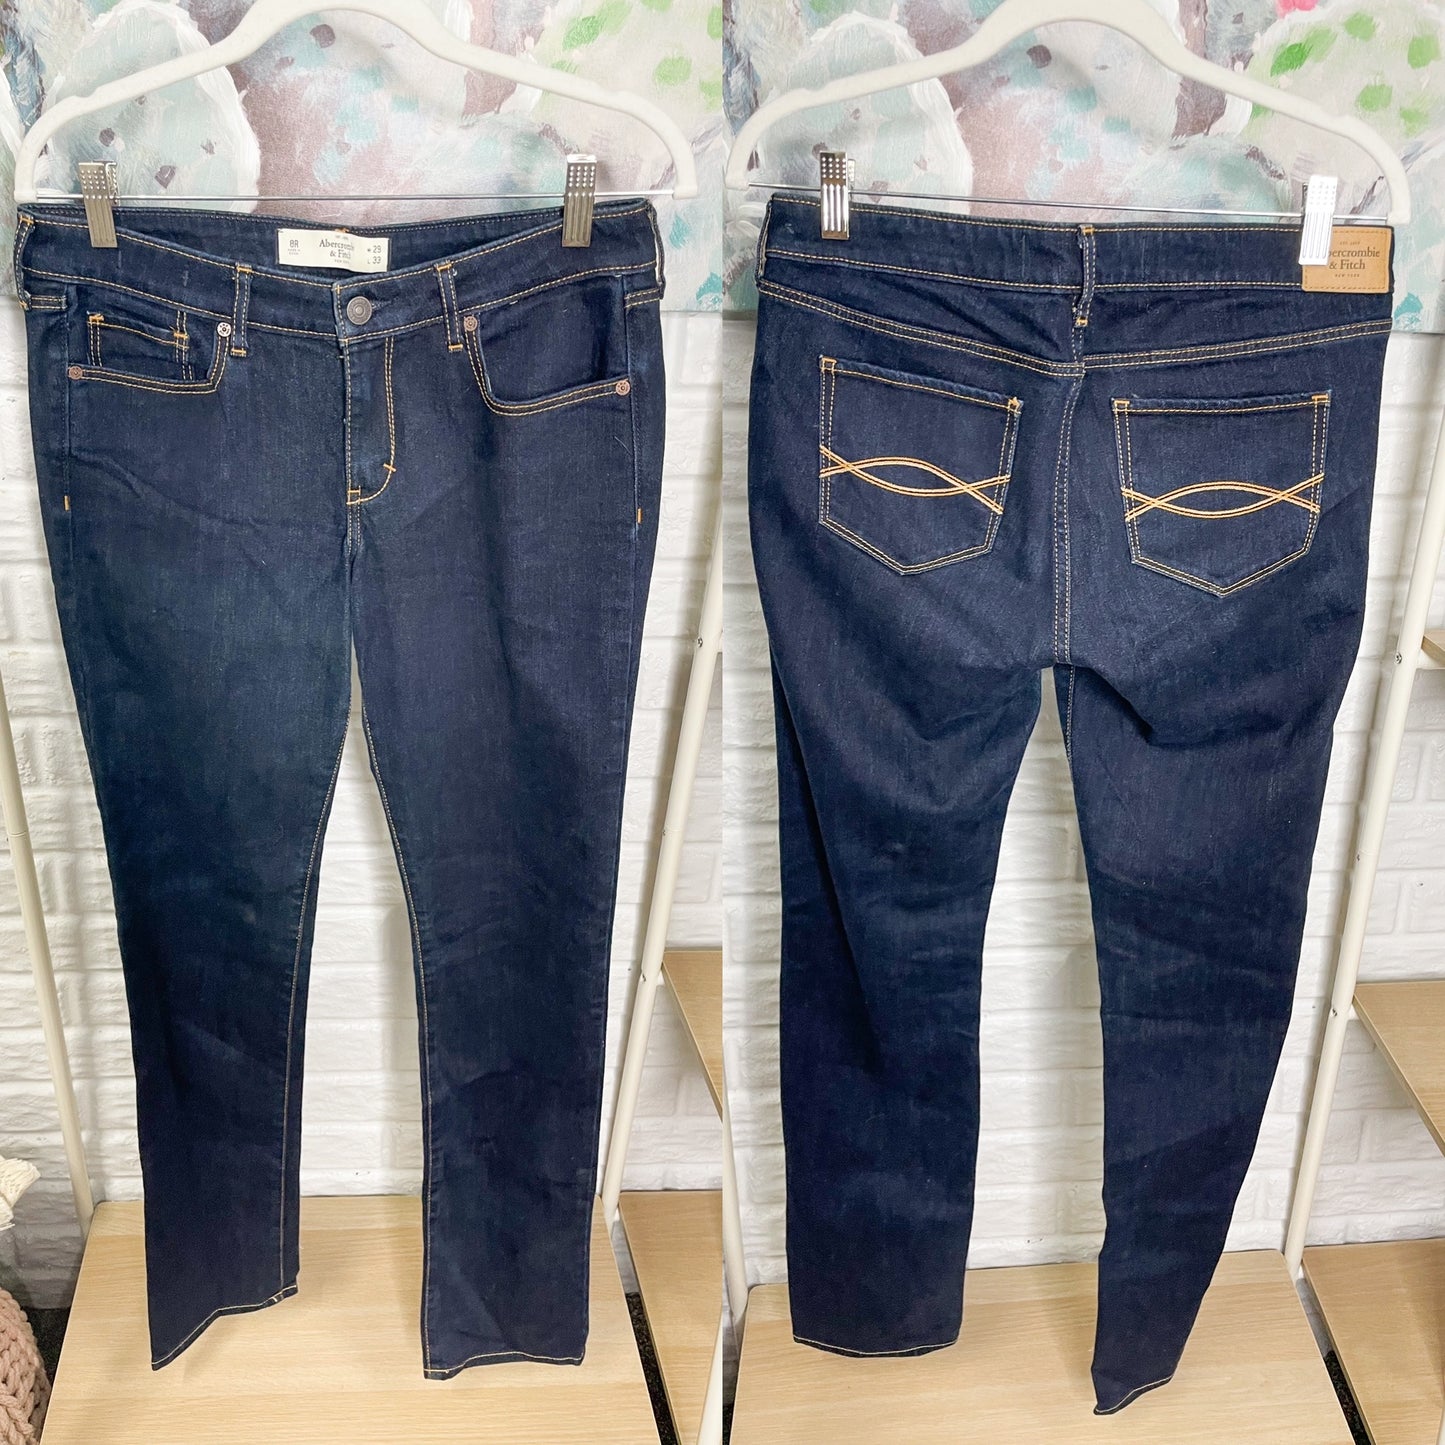 Abercrombie & Fitch The Skinny Dark Wash Jeans Size 8R